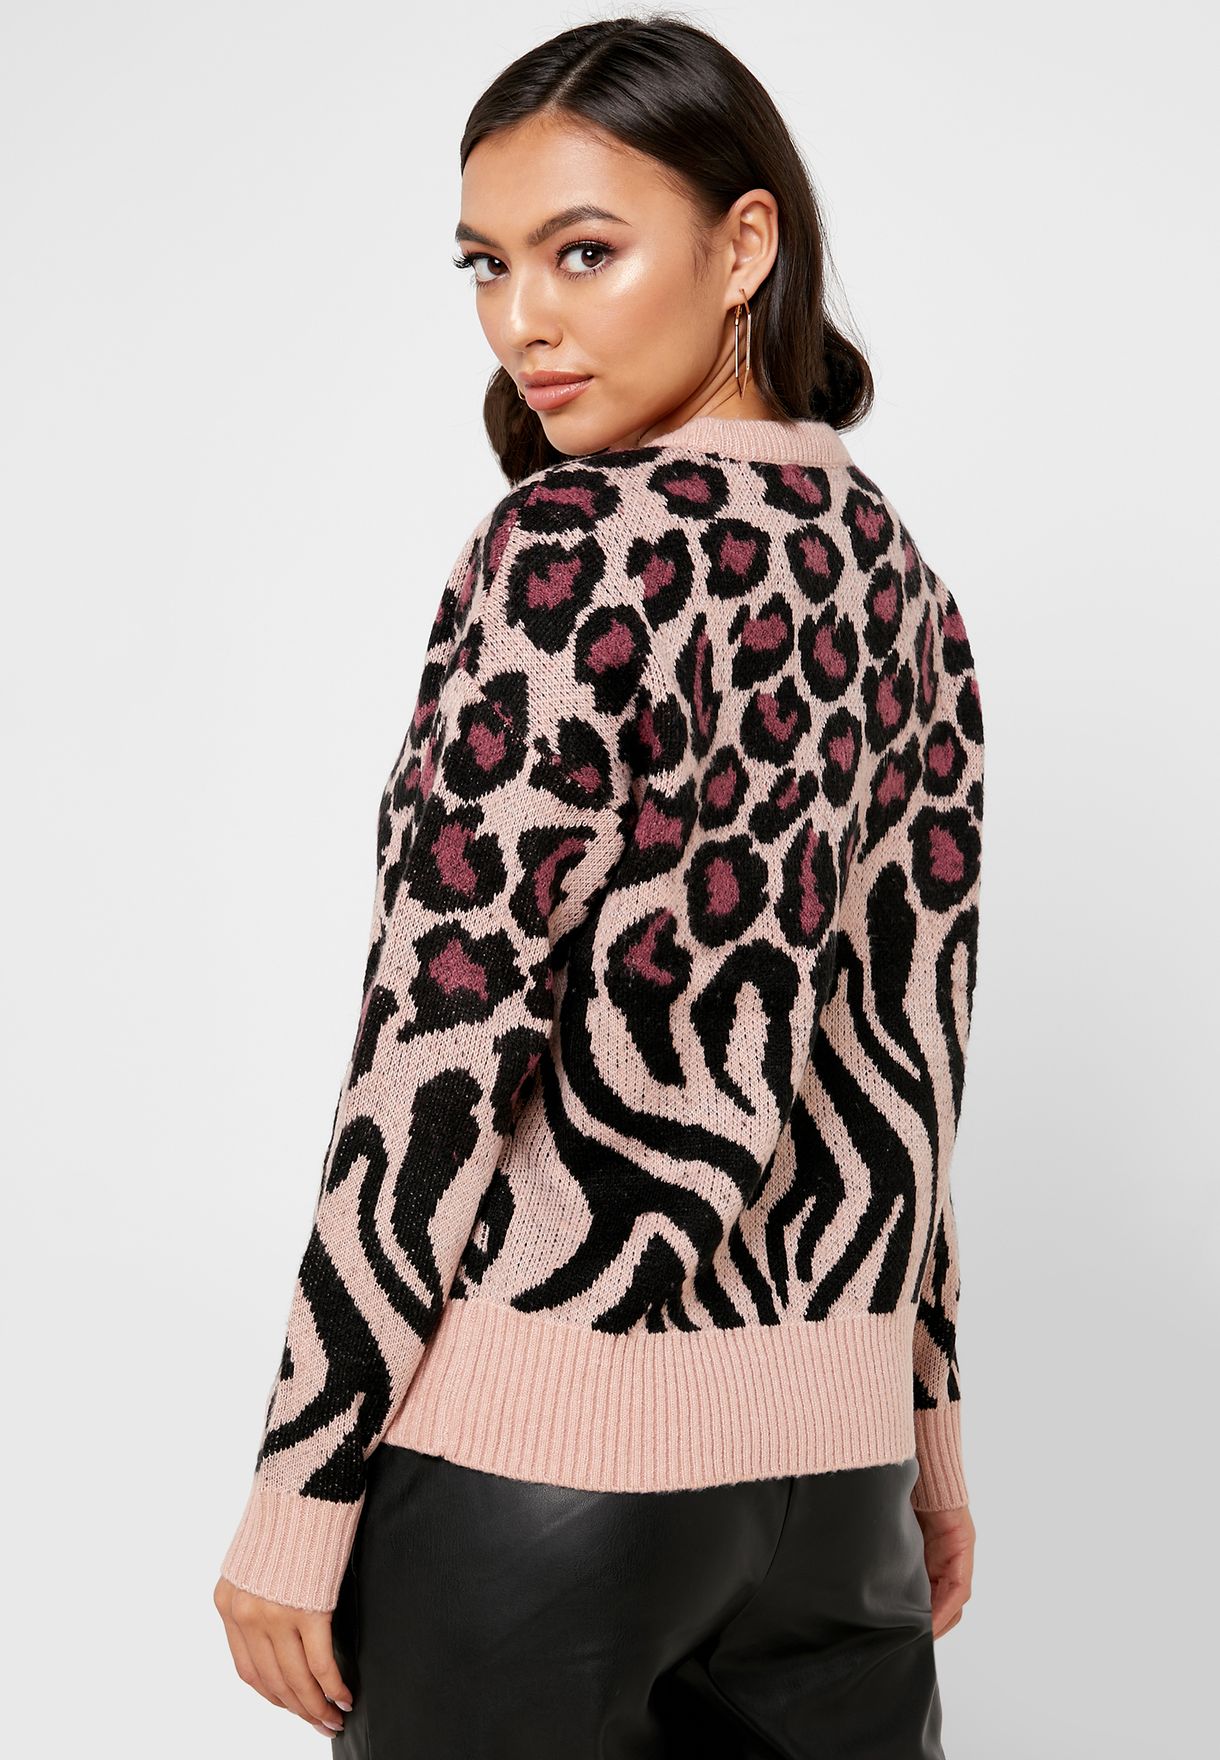 Buy Vero Moda prints Animal Print Sweater for Women in MENA, Worldwide